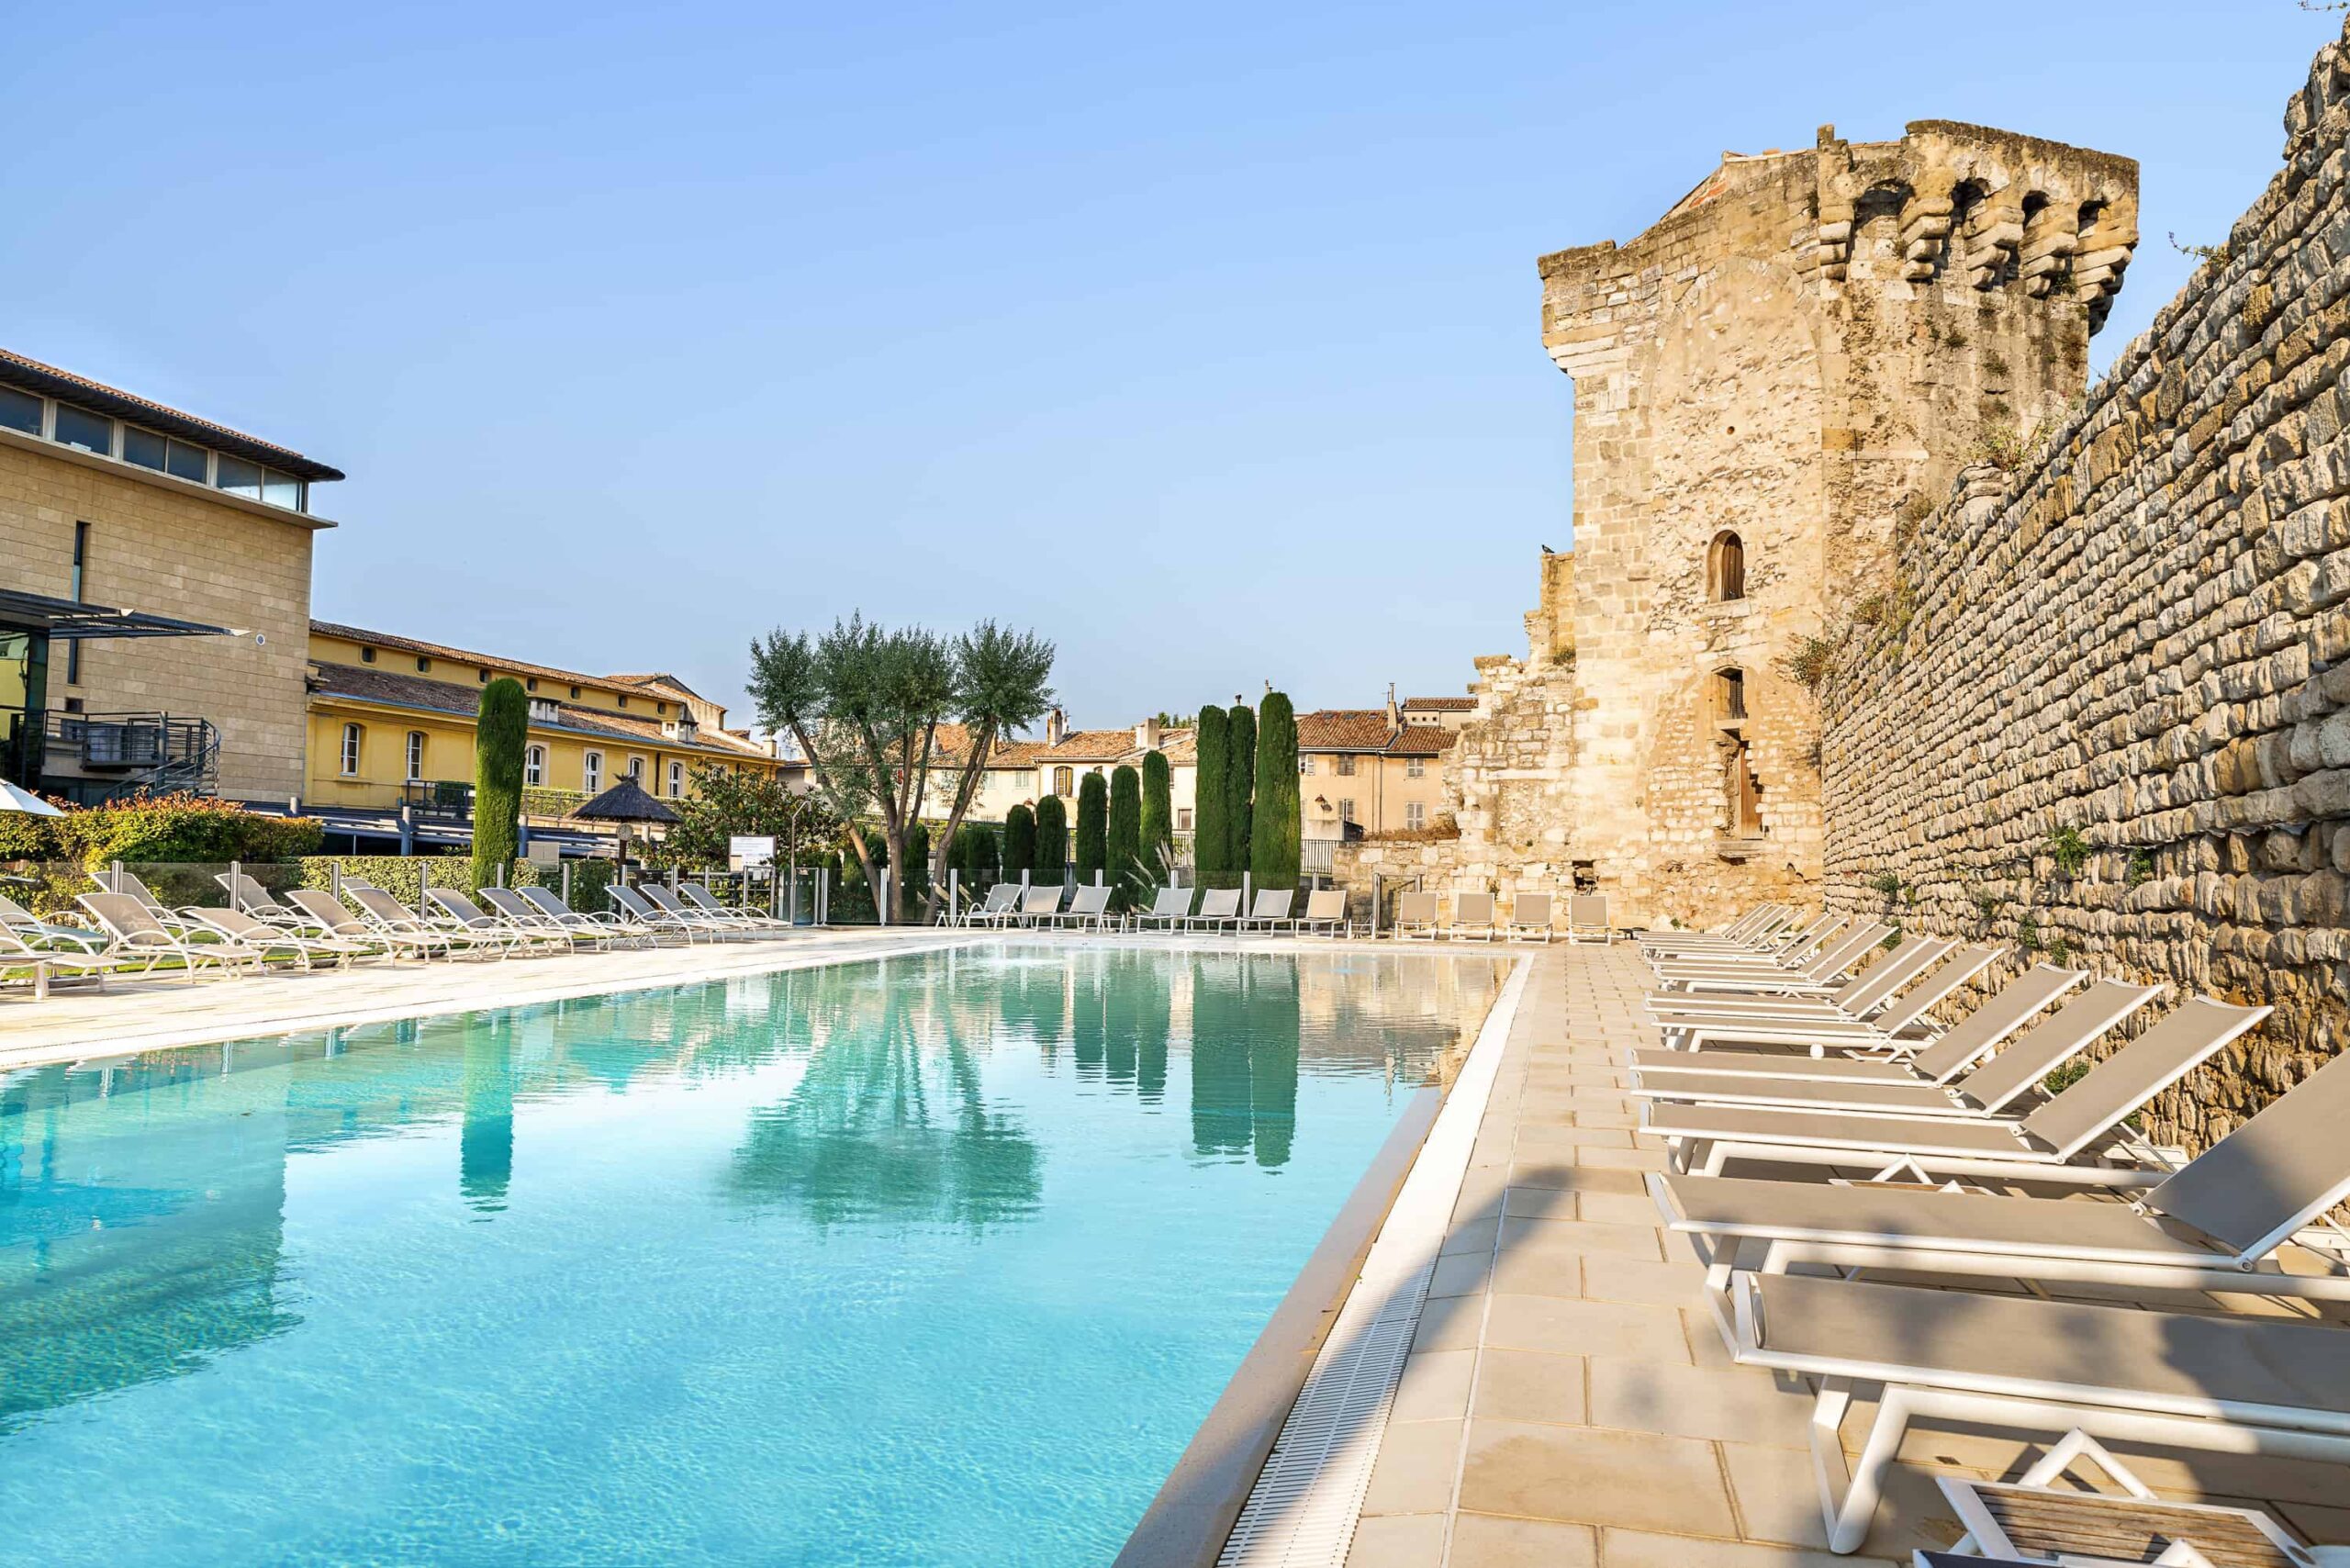 Aquabella Hotel & Spa in Aix-en-Provence